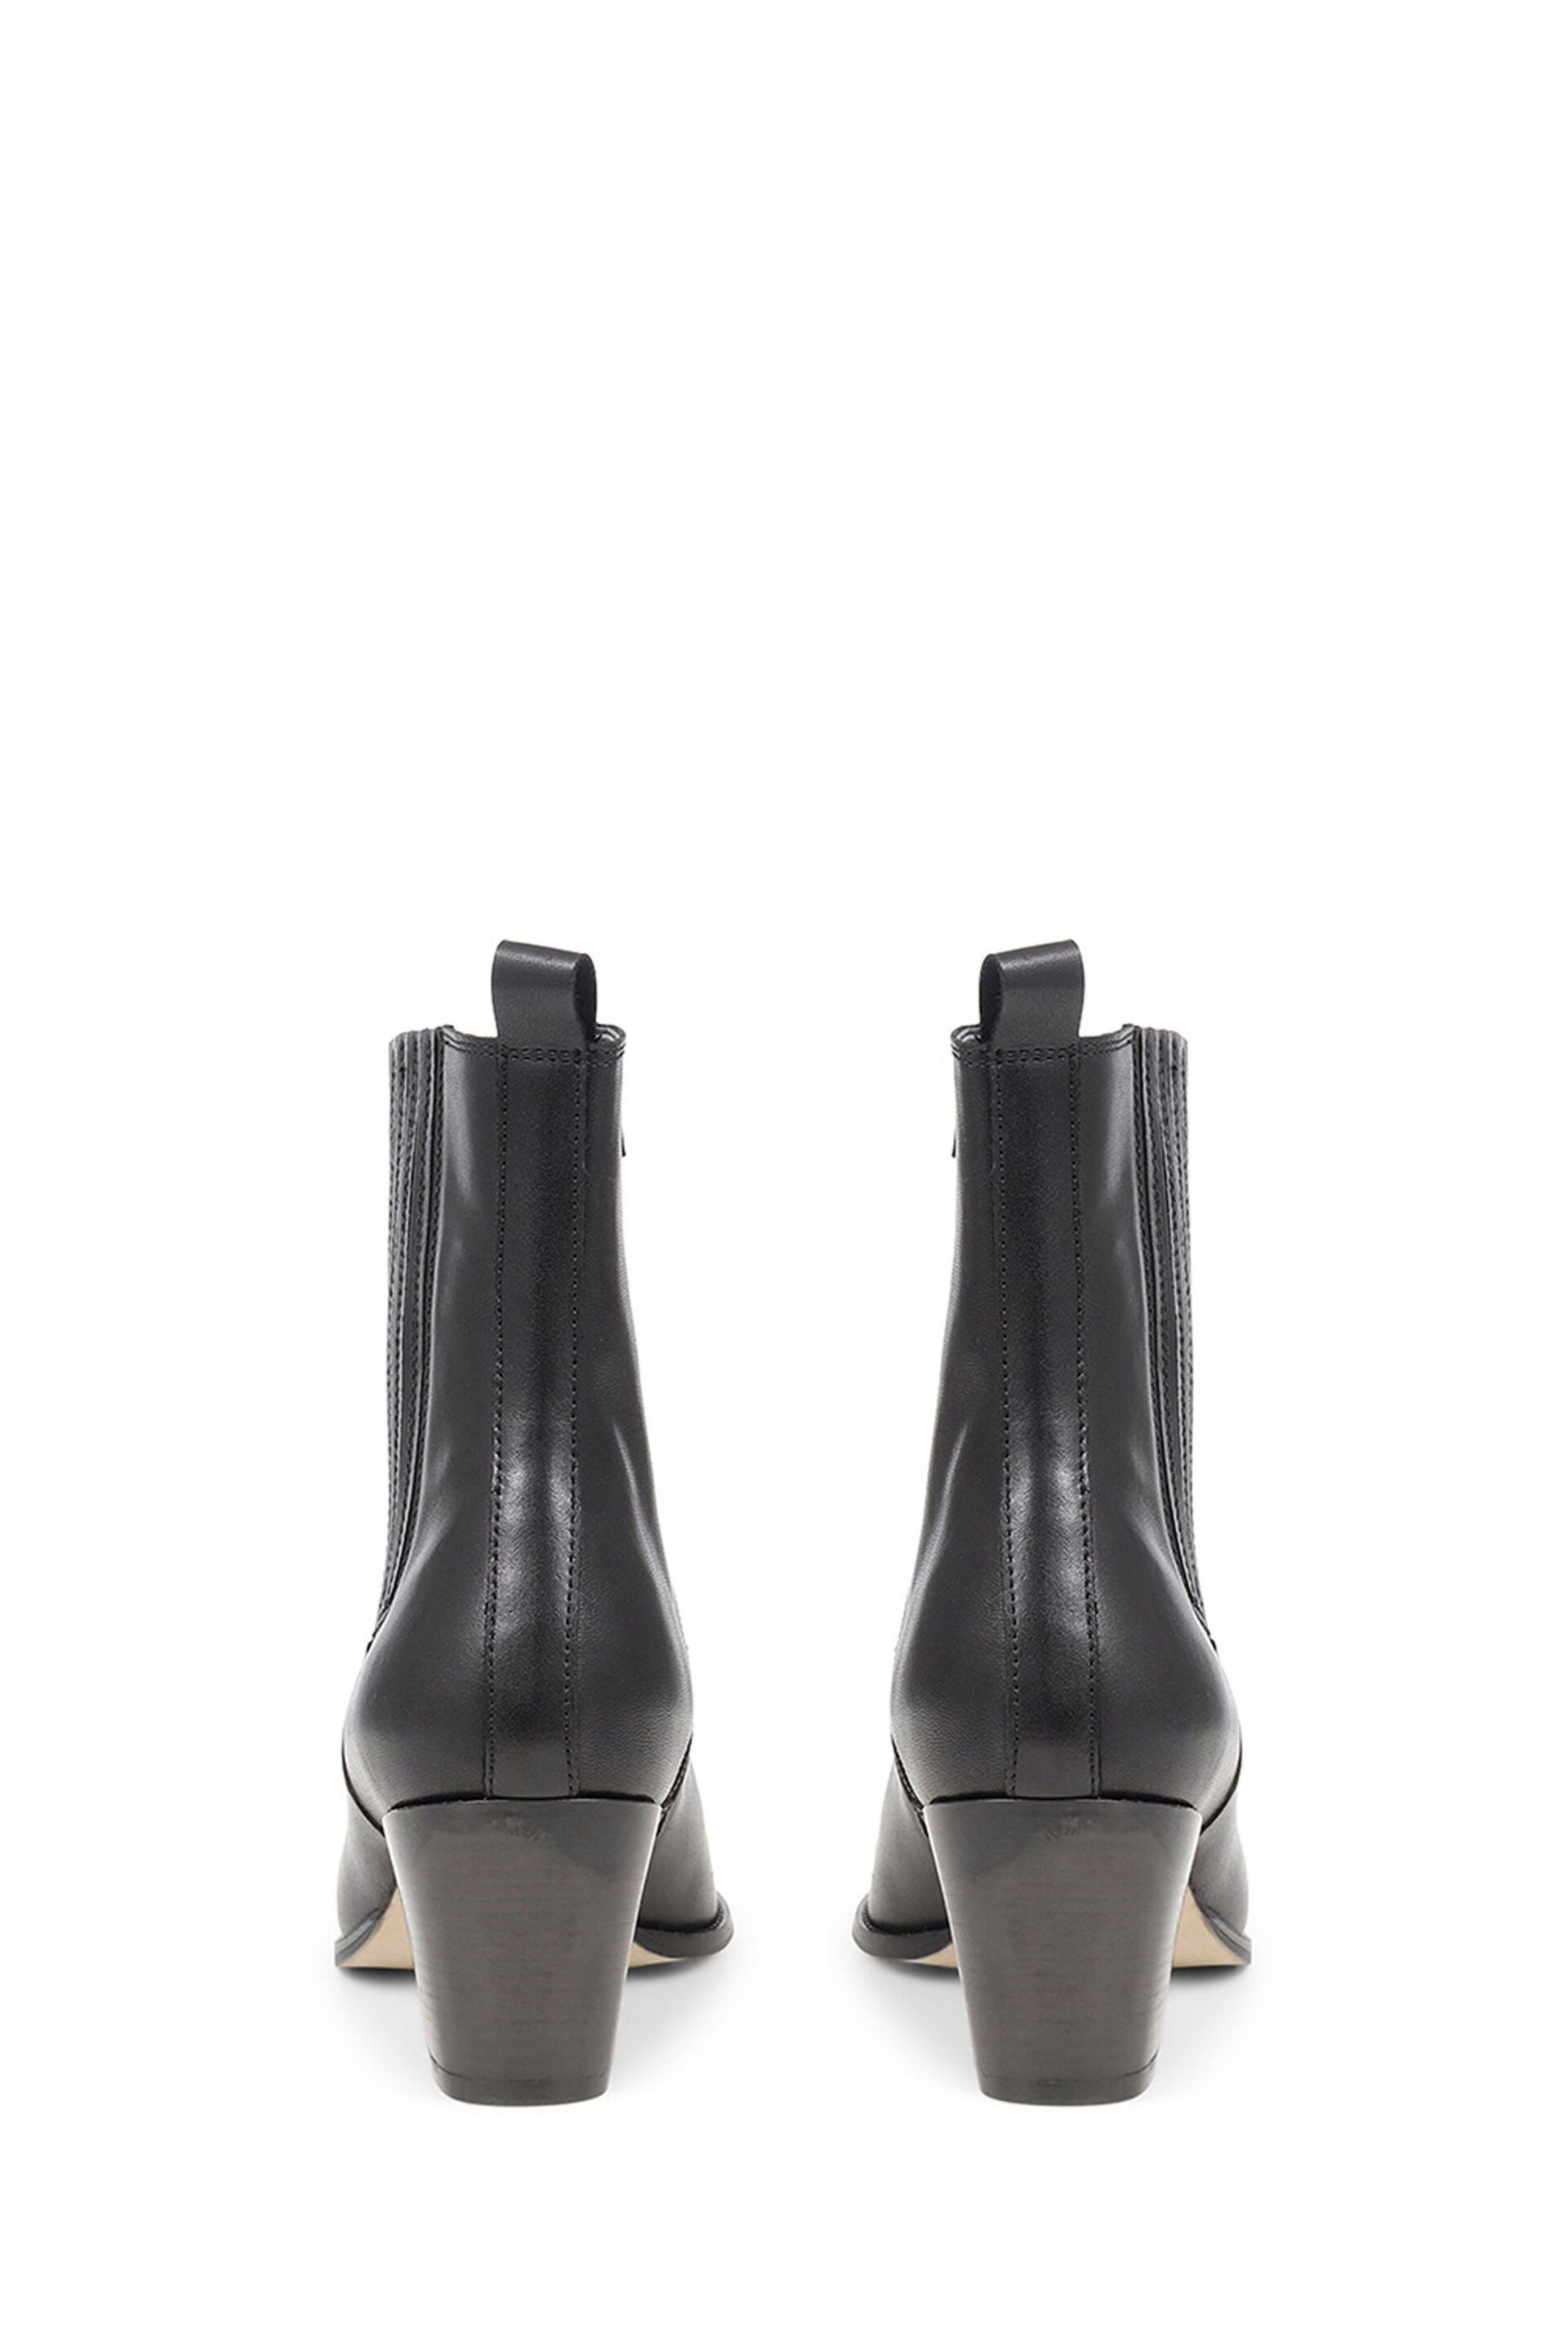 Jones Bootmaker Lizia Heeled Leather Black Ankle Boots - Image 3 of 5